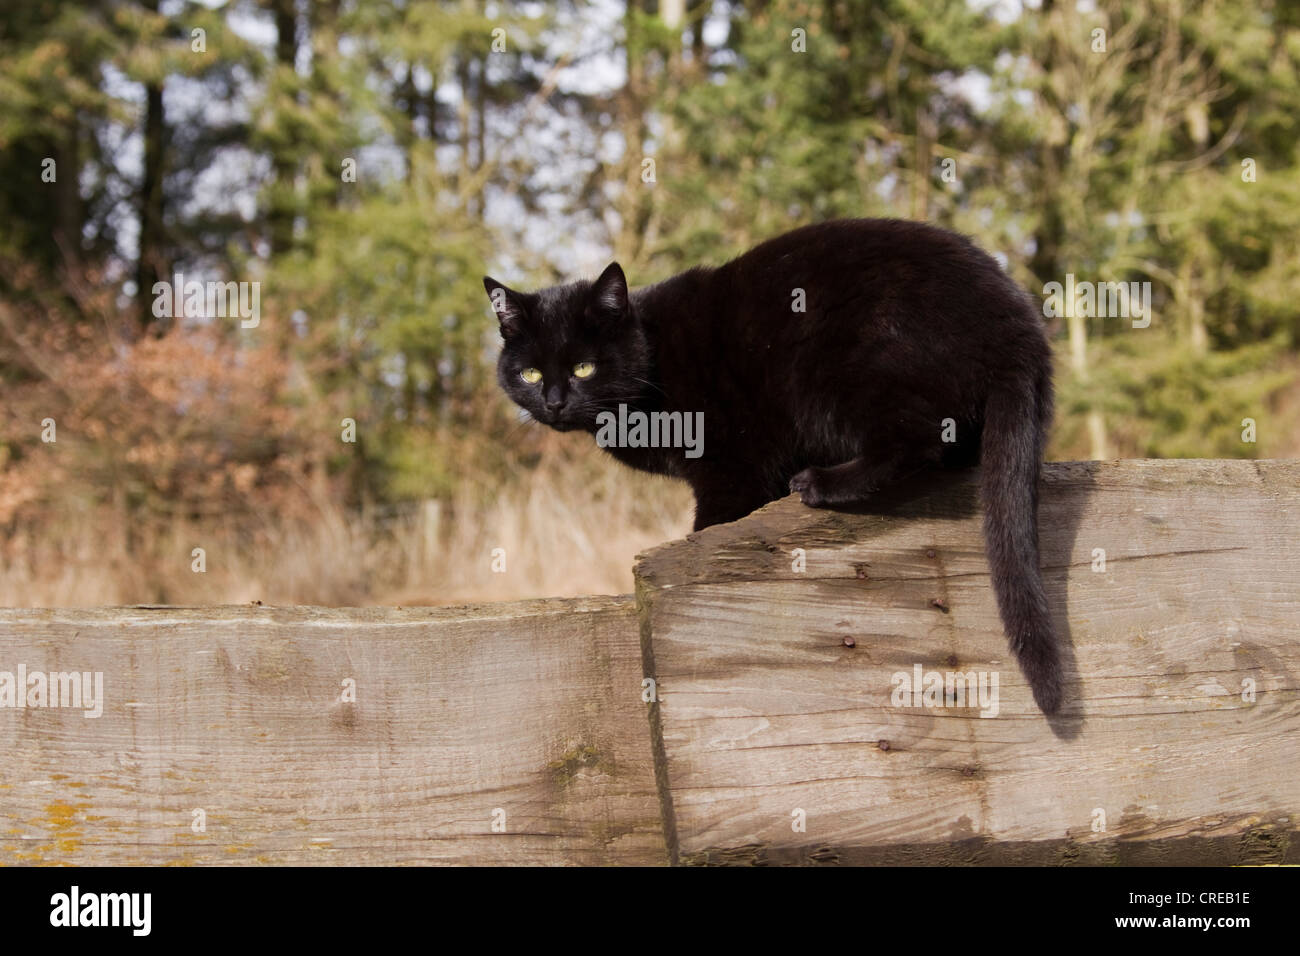 Black domestic cat sitting on a wooden fence, Vulkaneifel region, Rhineland-Palatinate, Germany, Europe Stock Photo